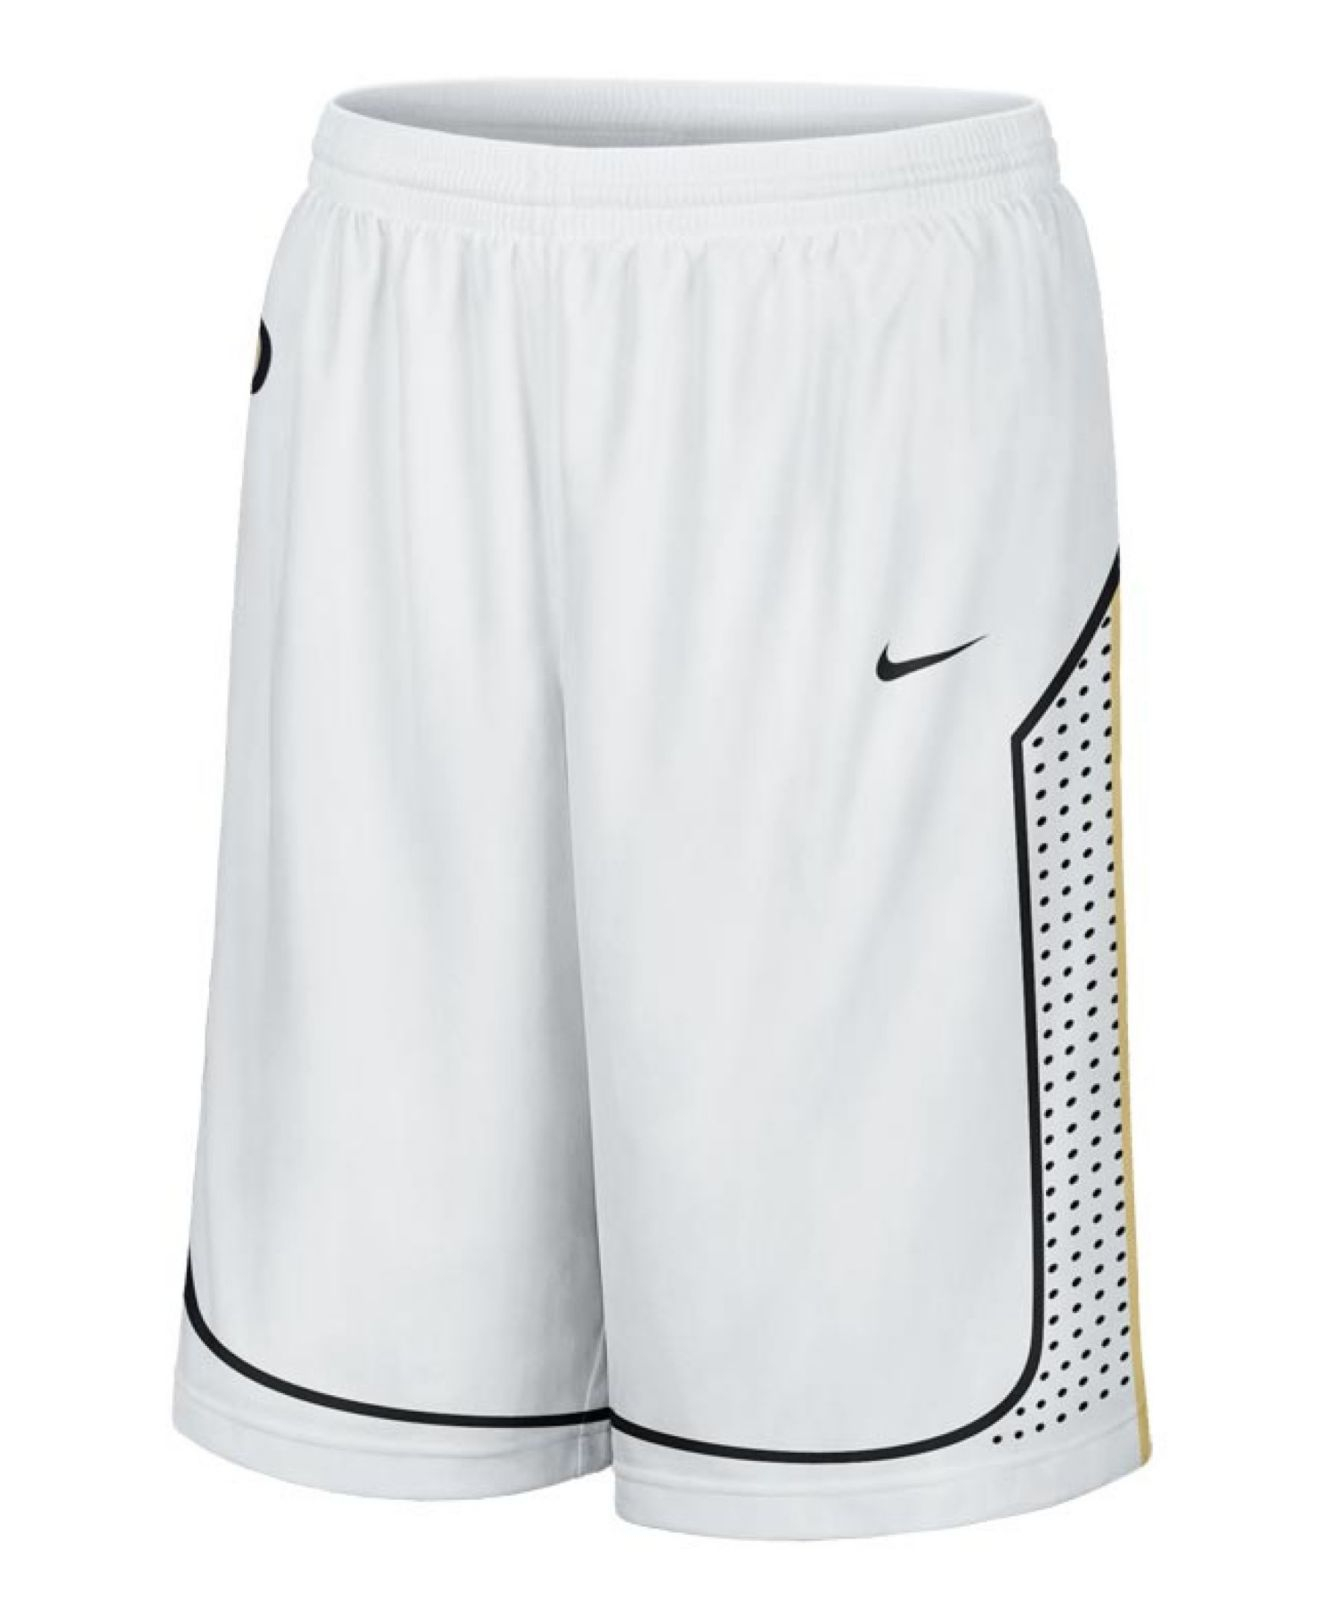 Lyst - Nike Men'S Purdue Boilermakers Replica Shorts in White for Men